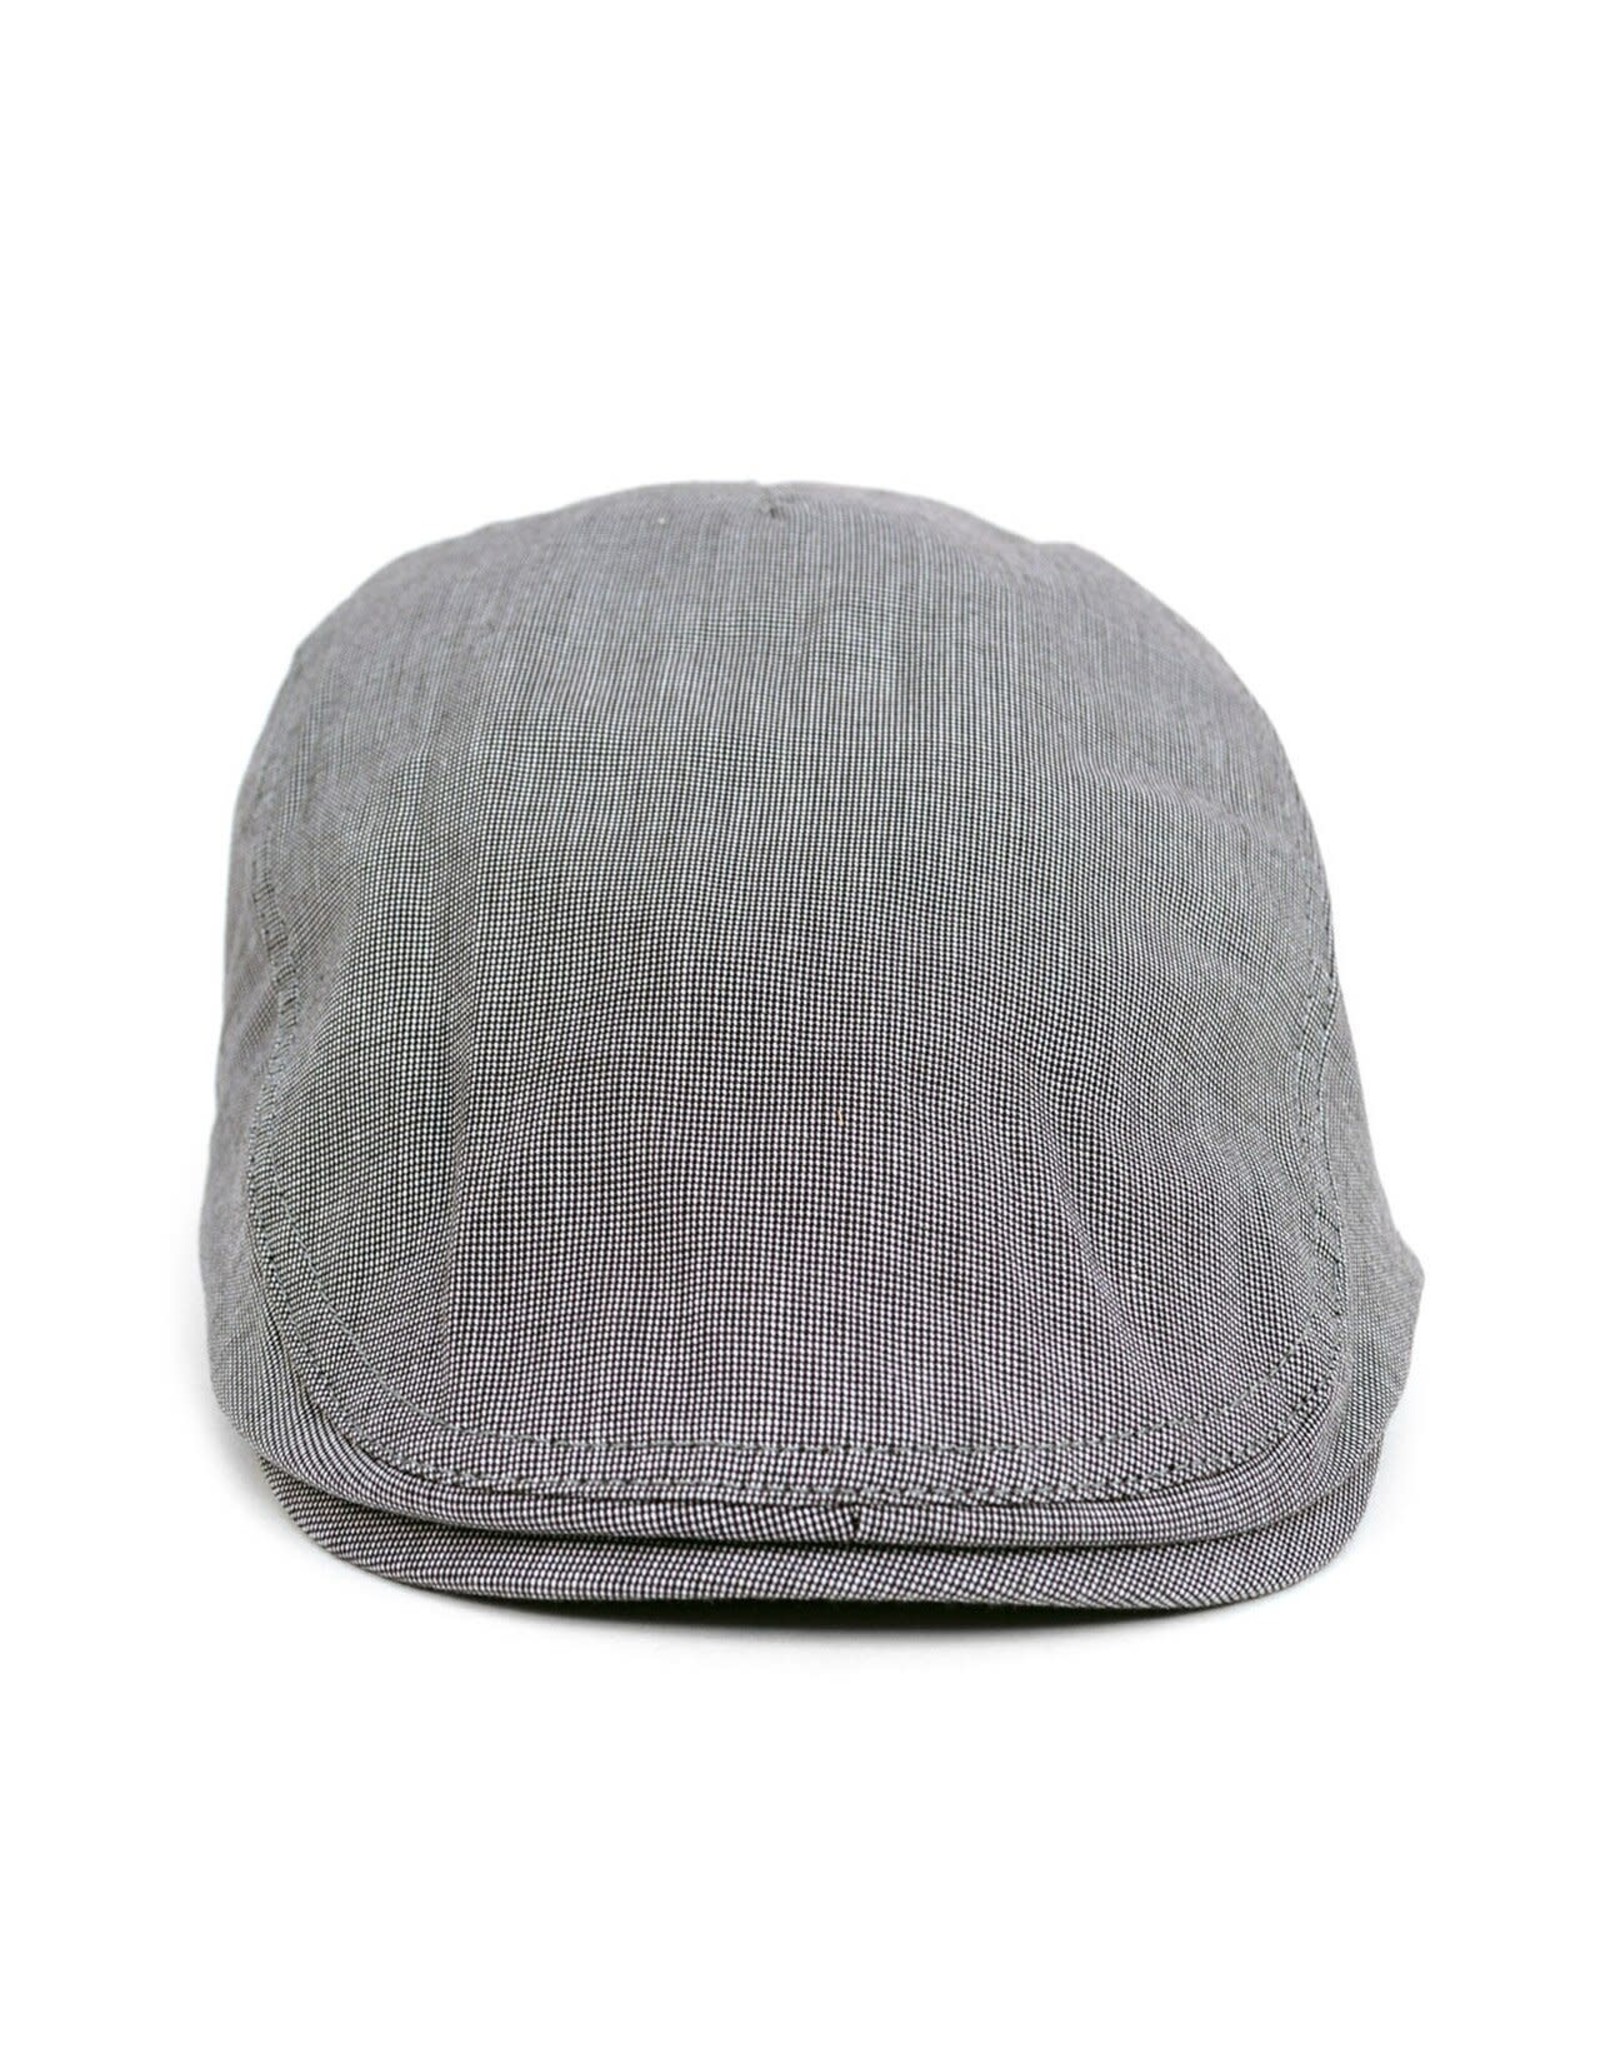 Selini New York Classic Crosshatch Patterned Hat